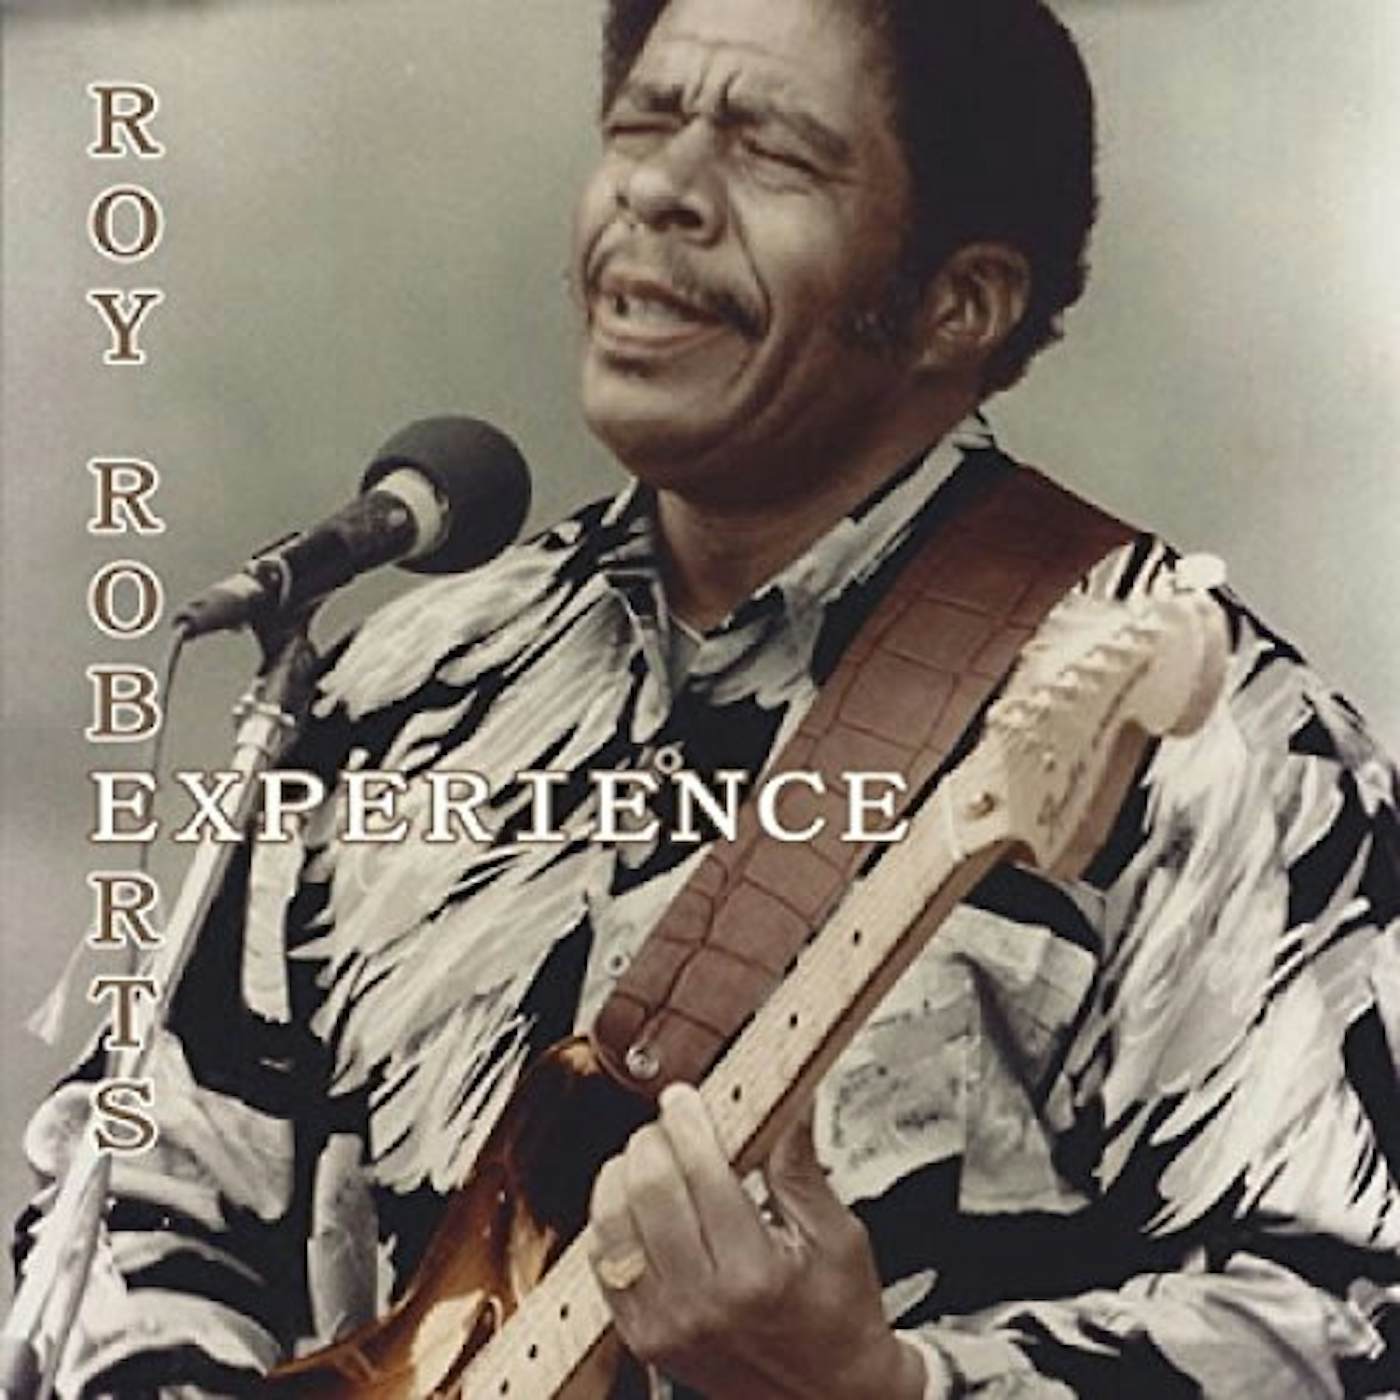 Roy Roberts Experience Vinyl Record